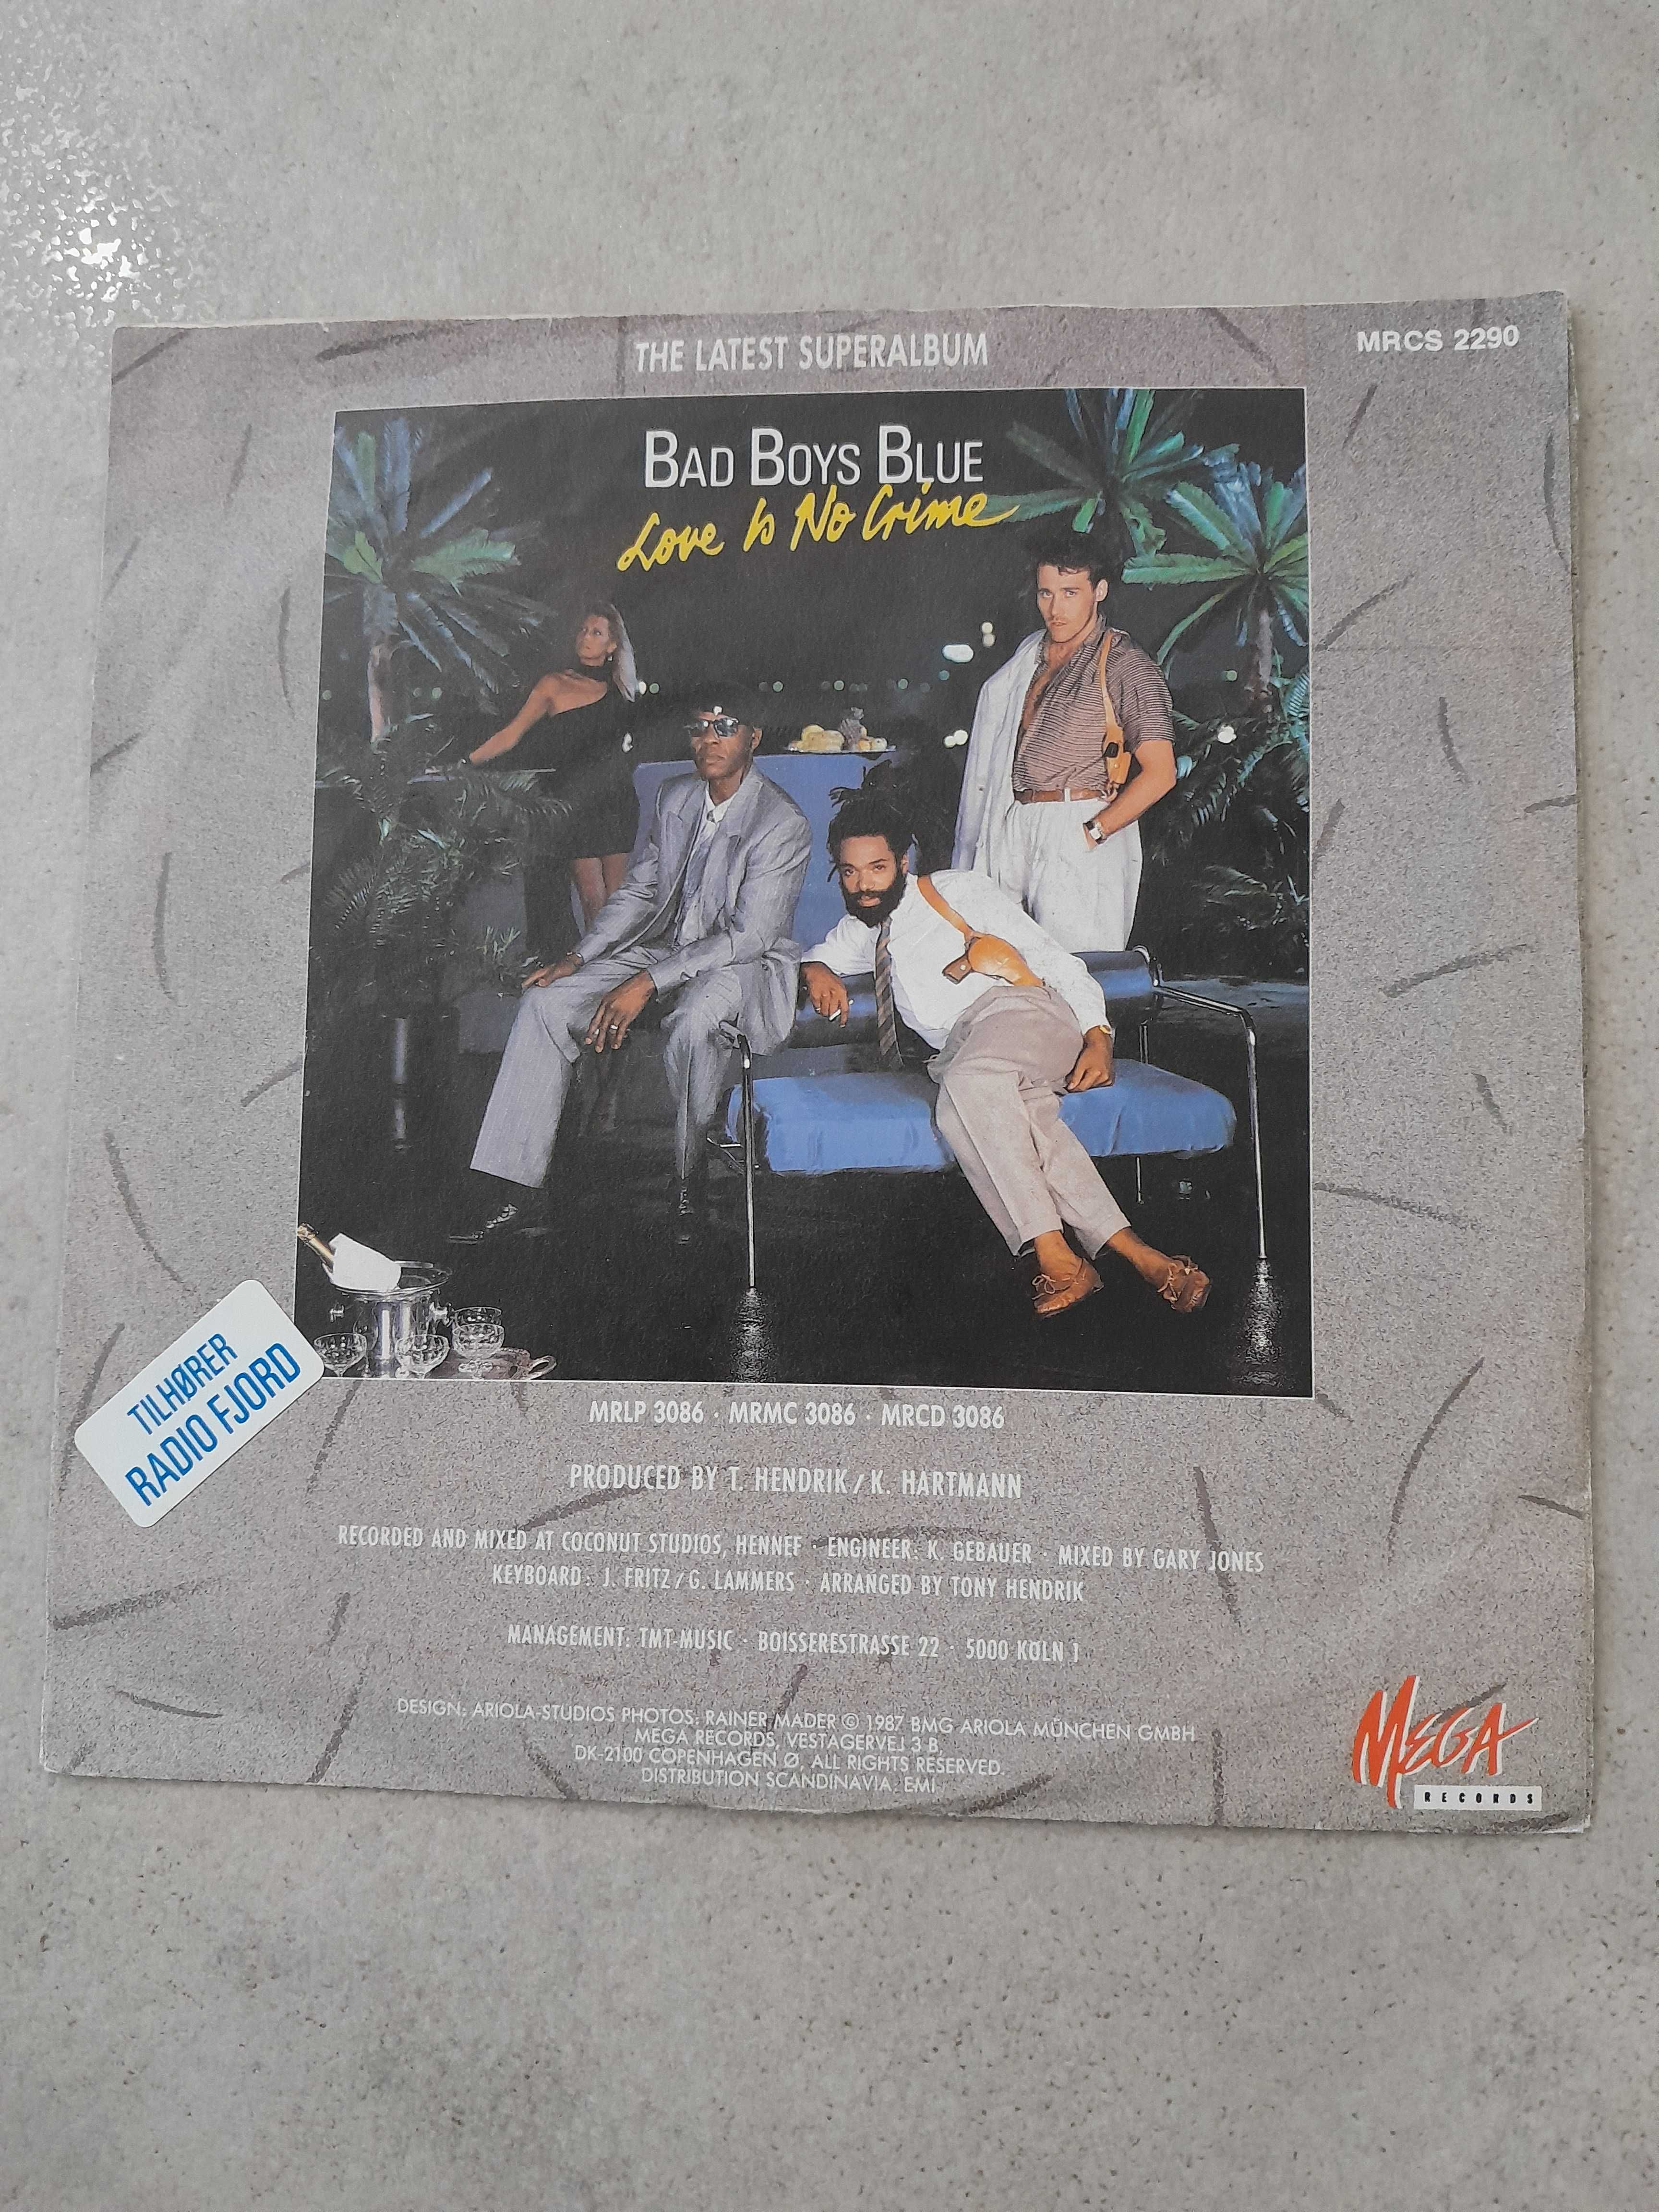 Bad boys blue - Don't walk away Suzanne - vinyl